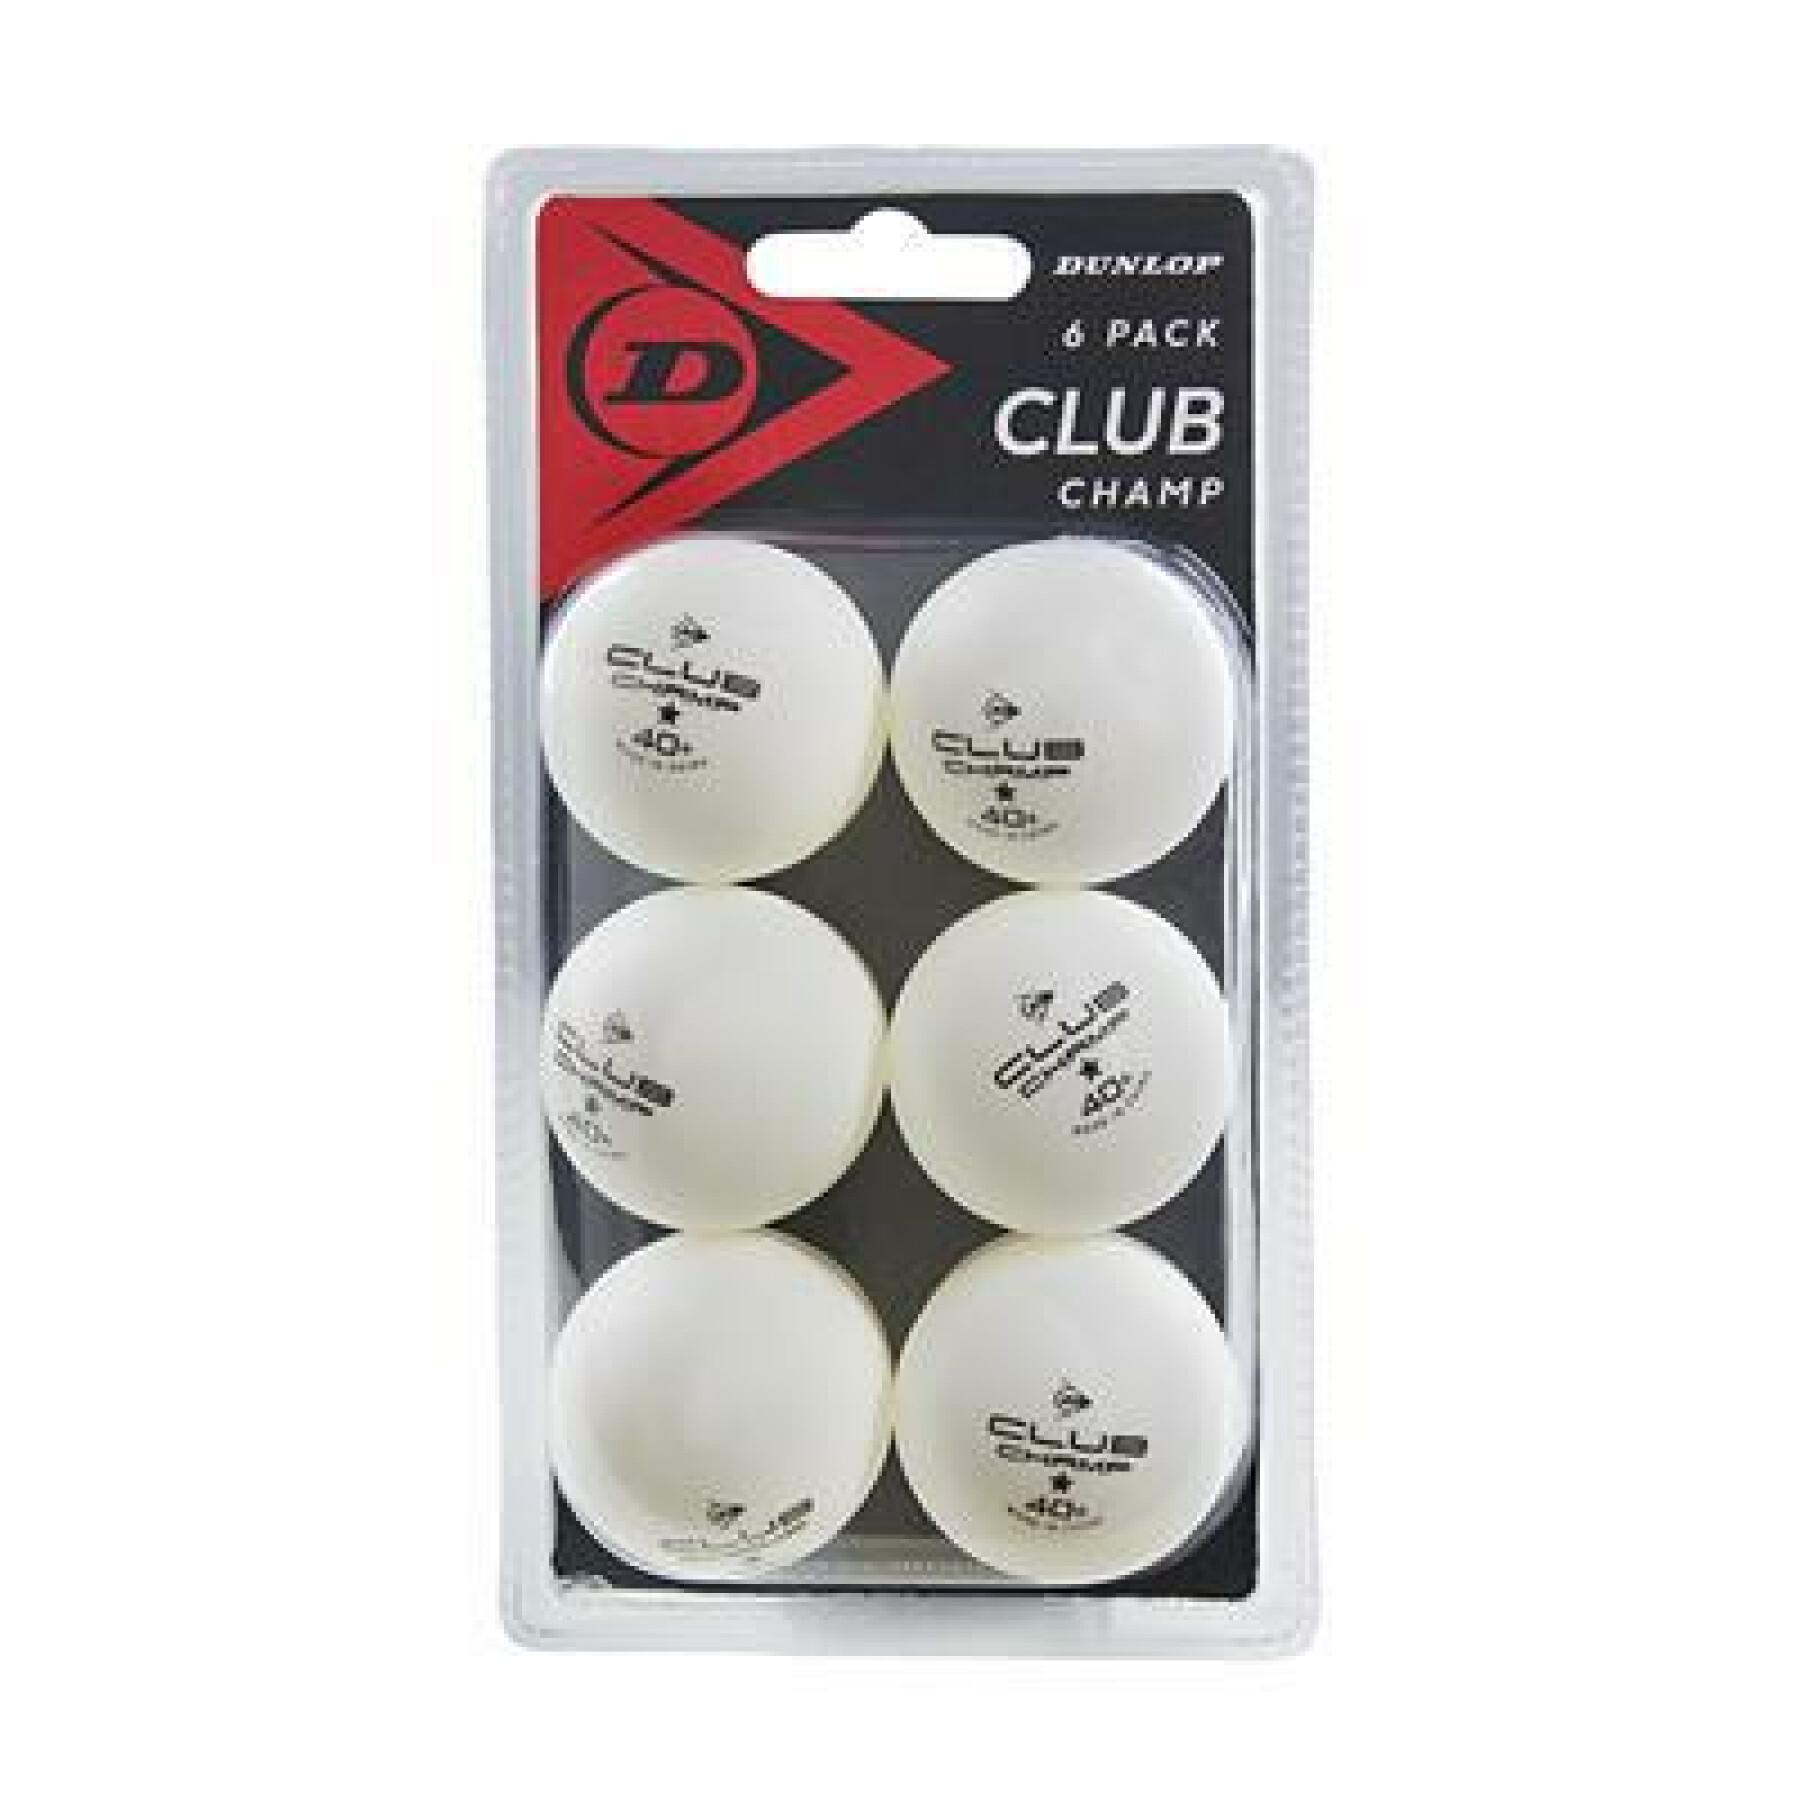 Conjunto de 6 bolas de ténis de mesa Dunlop 40+club champ